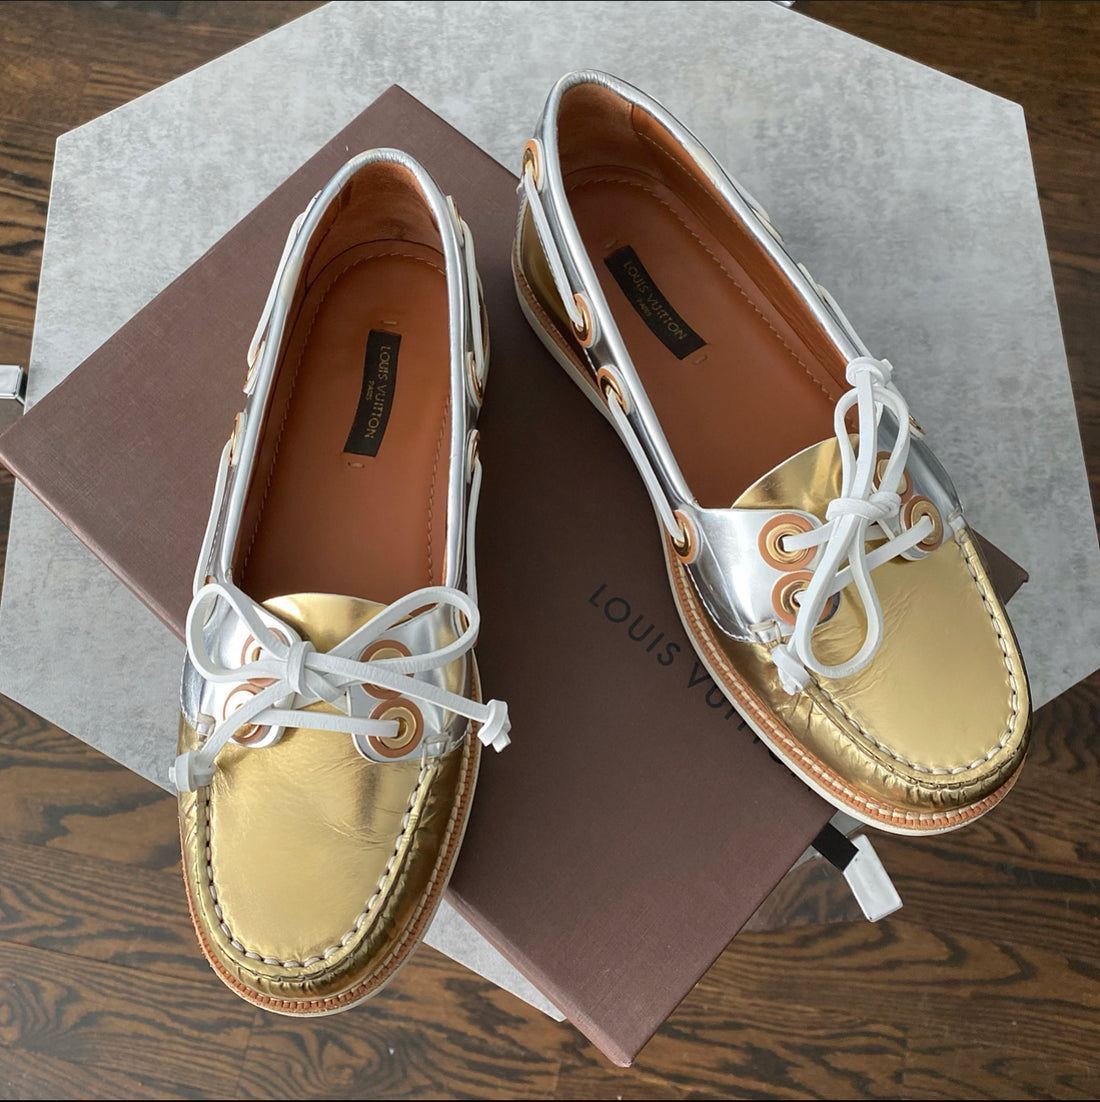 Lot 393 - Louis Vuitton White Marina Boat Shoes - Size